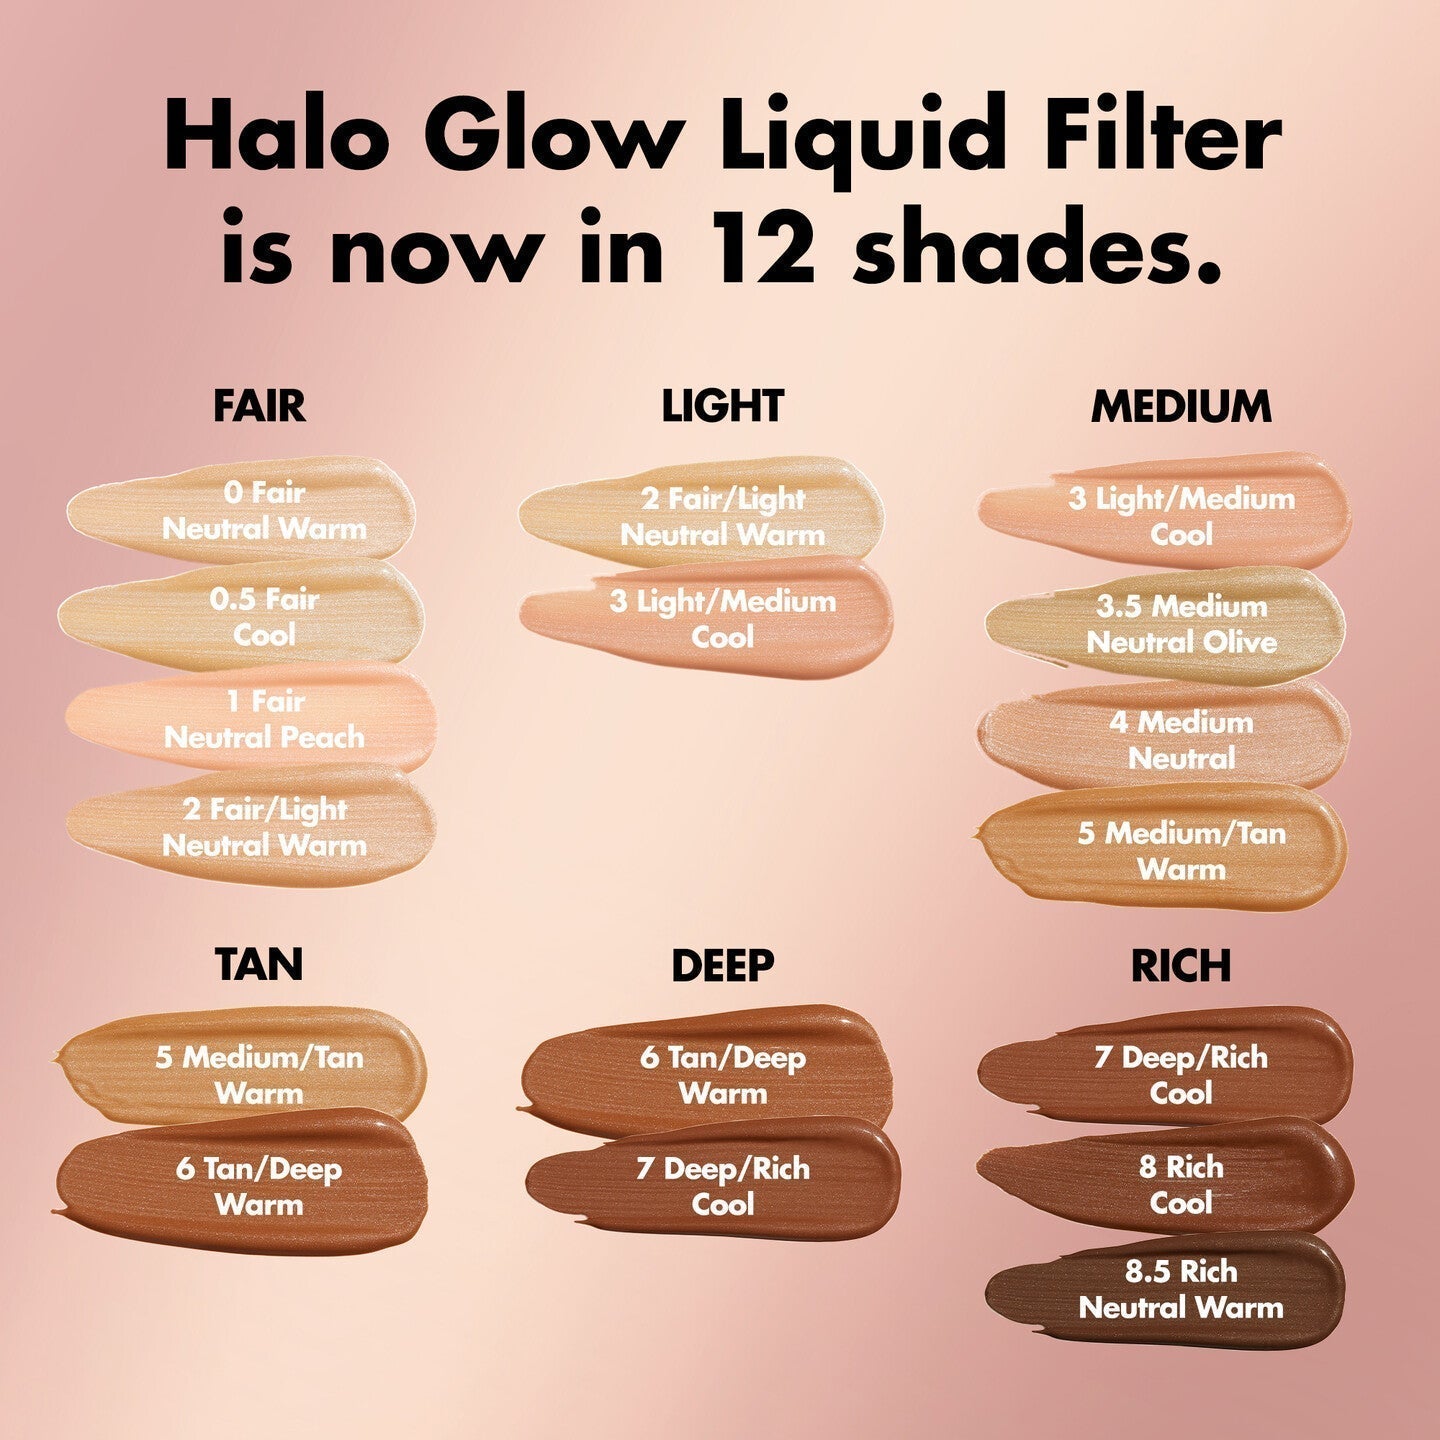 Halo Glow Liquid Filter - 6 Tan/Deep Warm